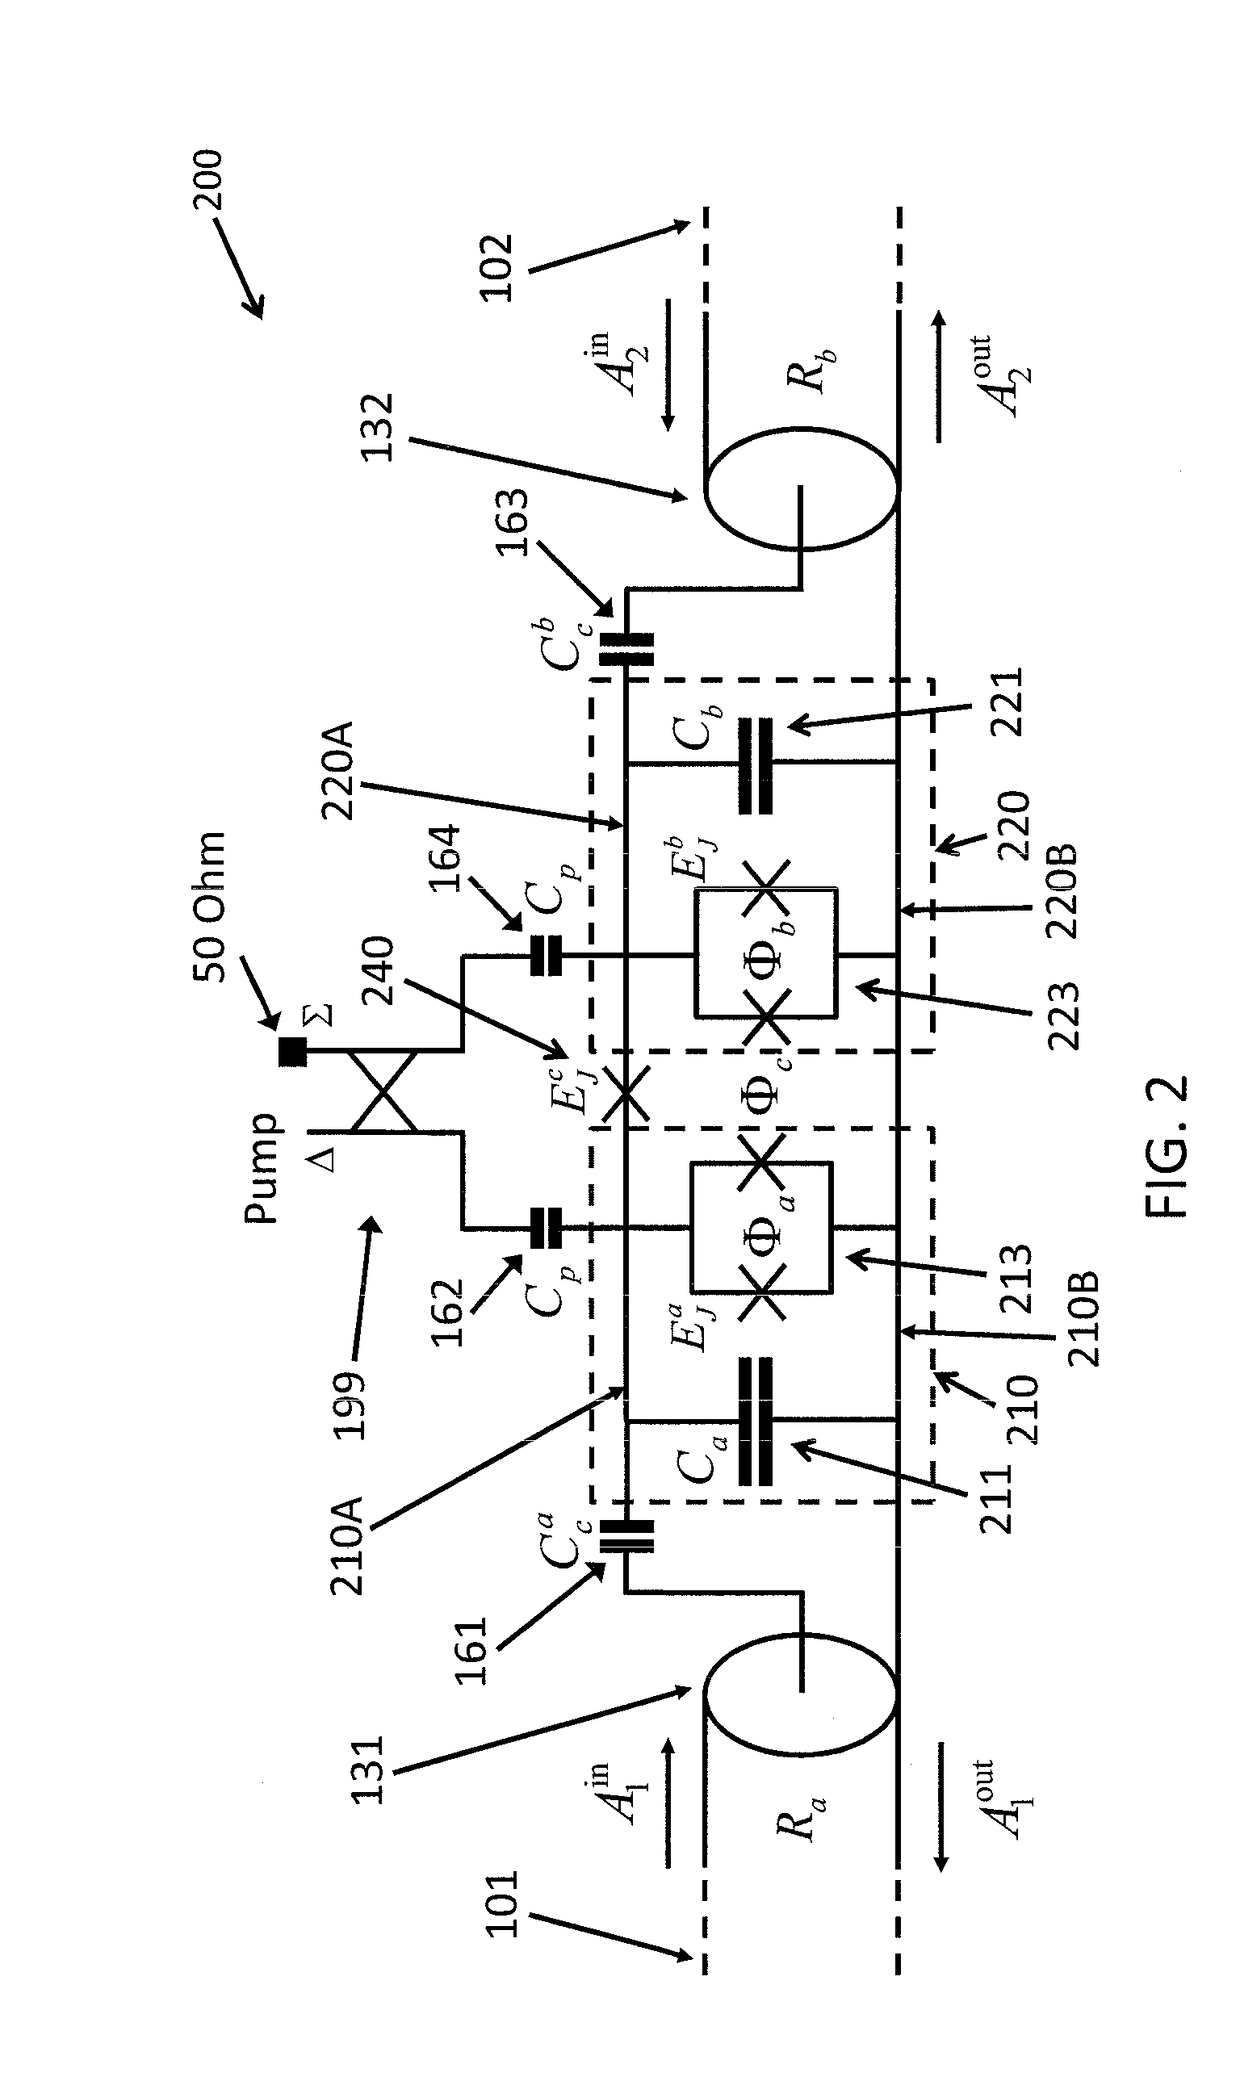 Josephson-coupled resonator amplifier (JRA)